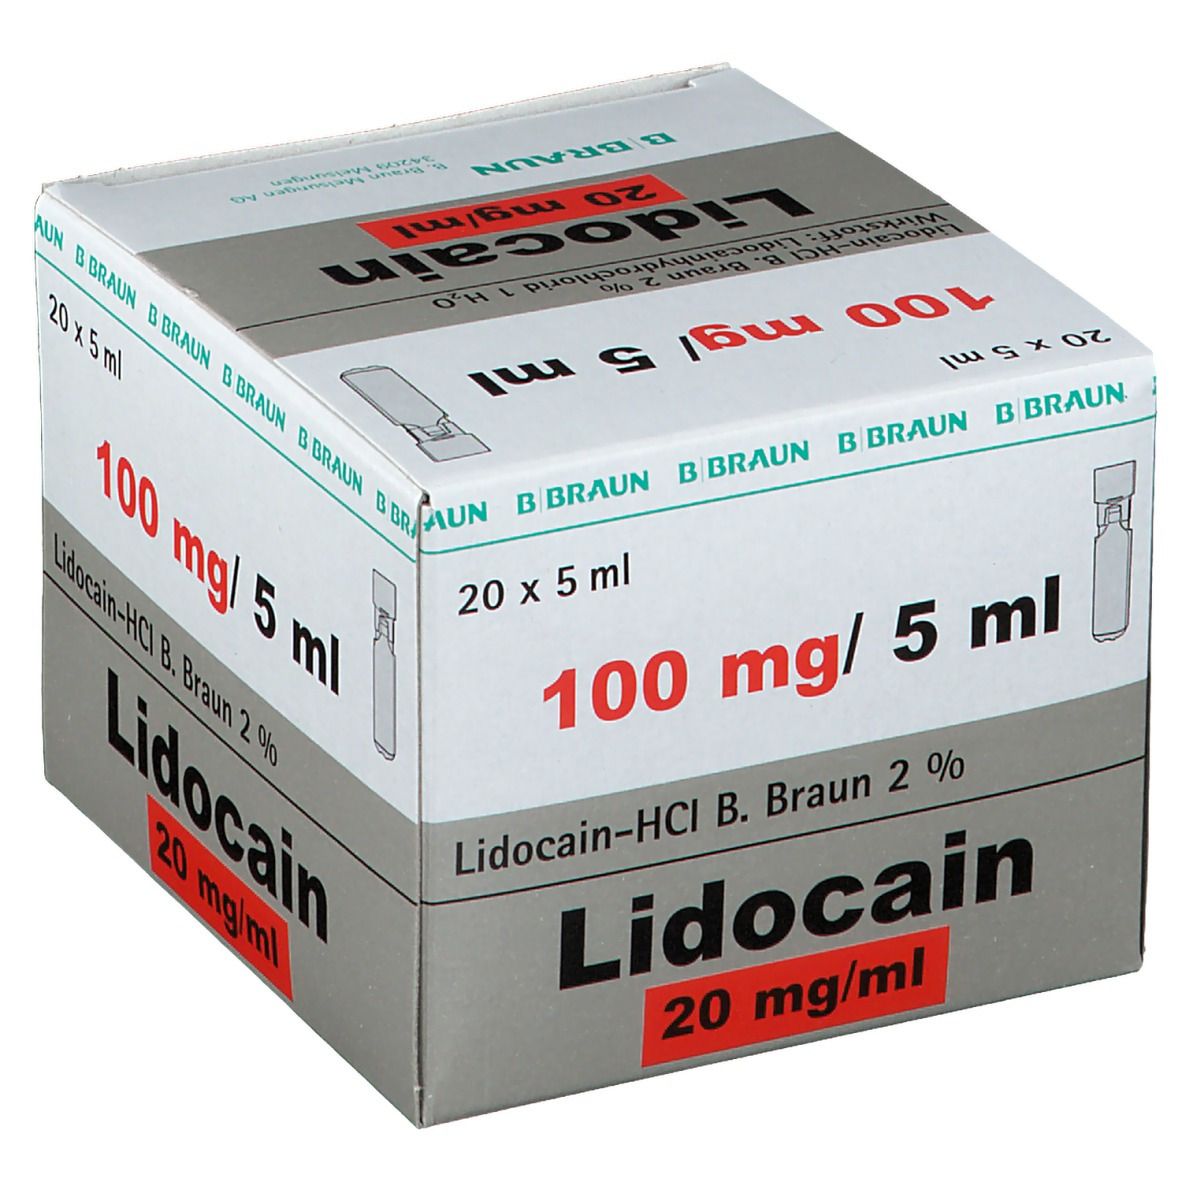 Lidocain-HCl B .Braun 2 %